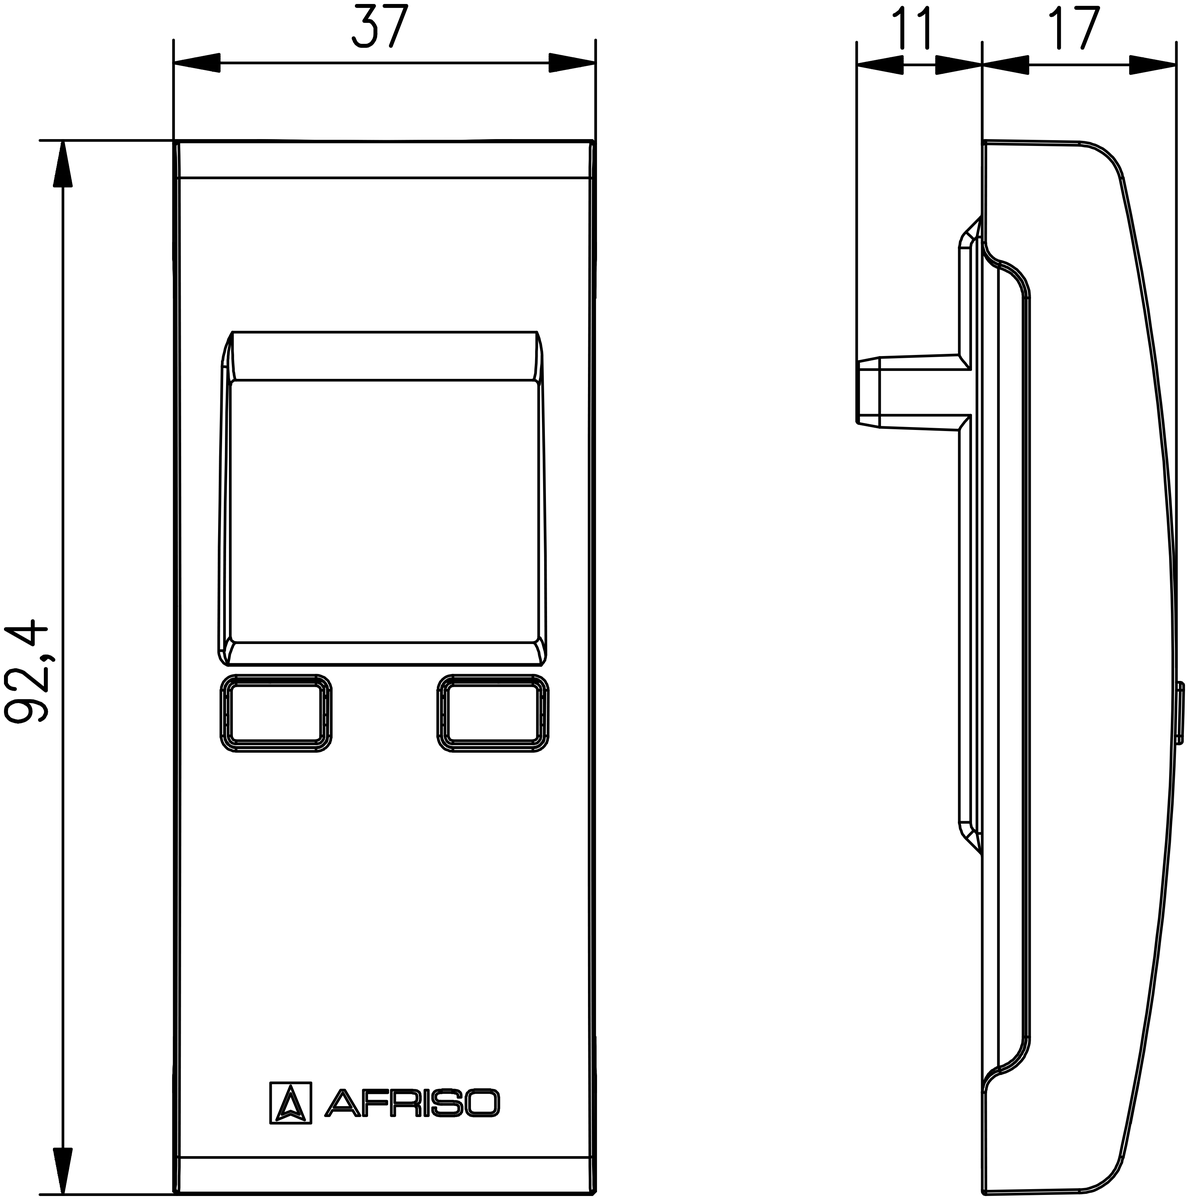 AFRISO Uhr-Modul UM für Basismodul BM BEF 8330